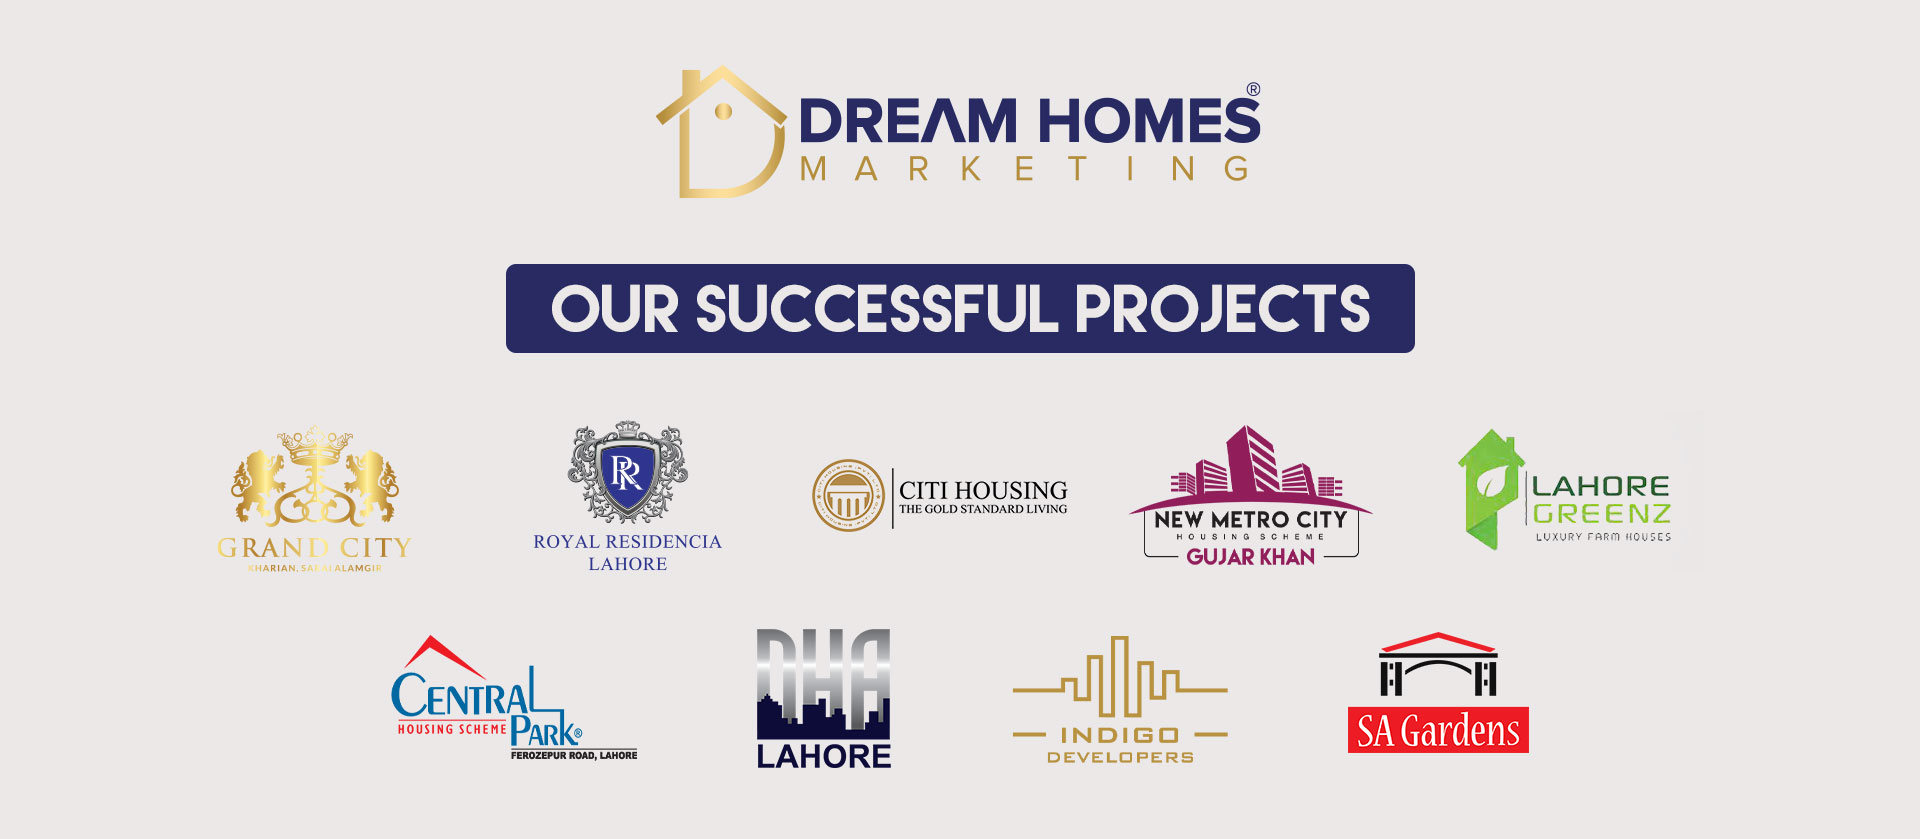 Dream Homes Marketing